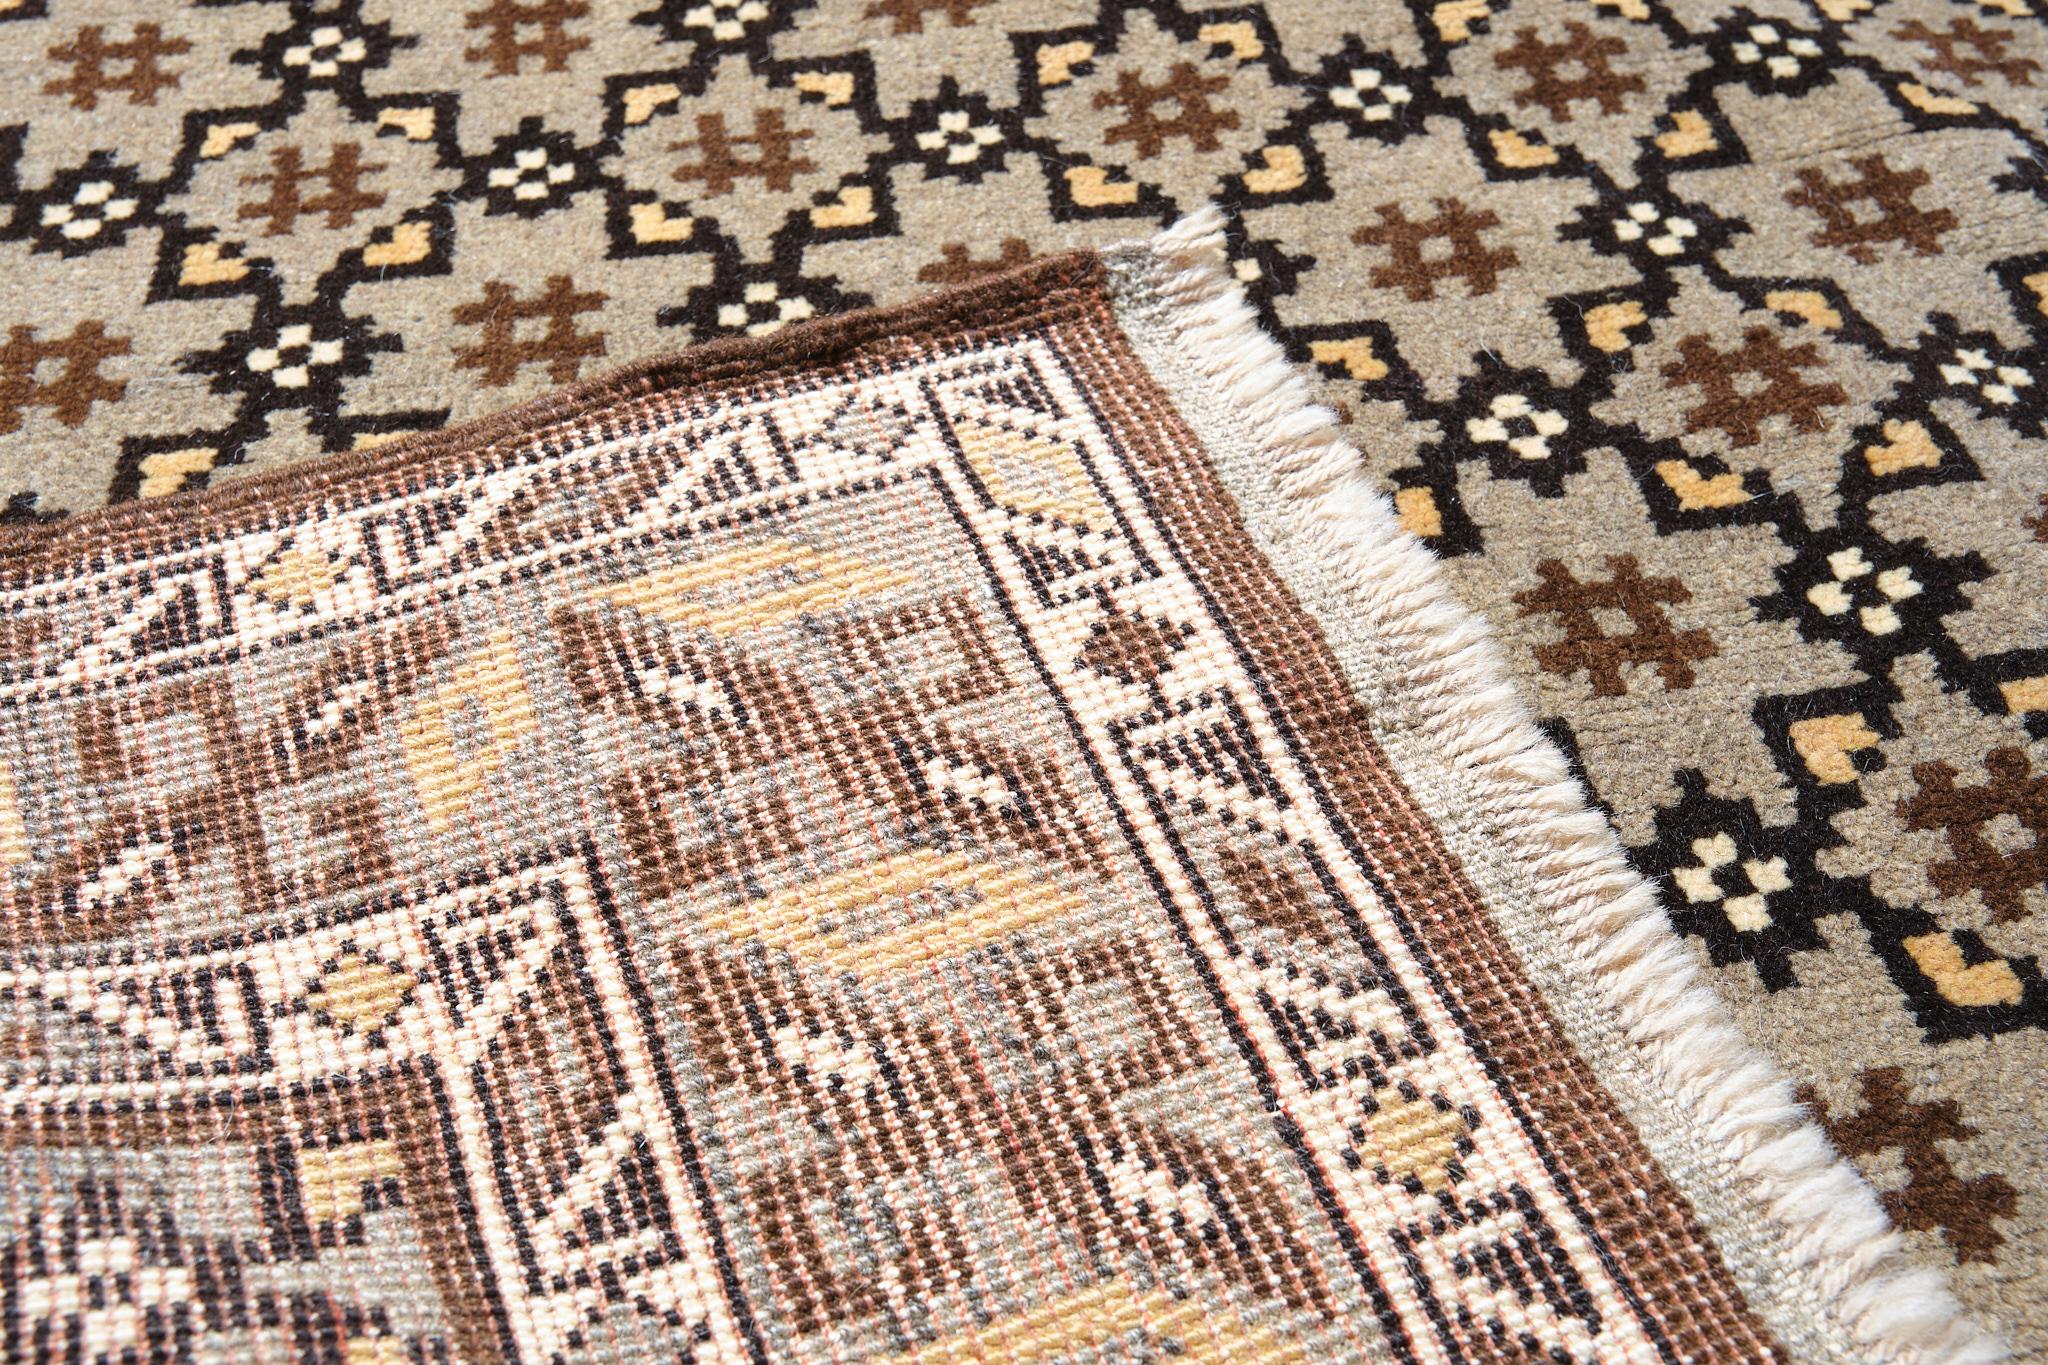 Turkish Ararat Rugs the Divrigi Ulu Mosque Carpet Anatolian Revival Rug, Natural Dyed For Sale